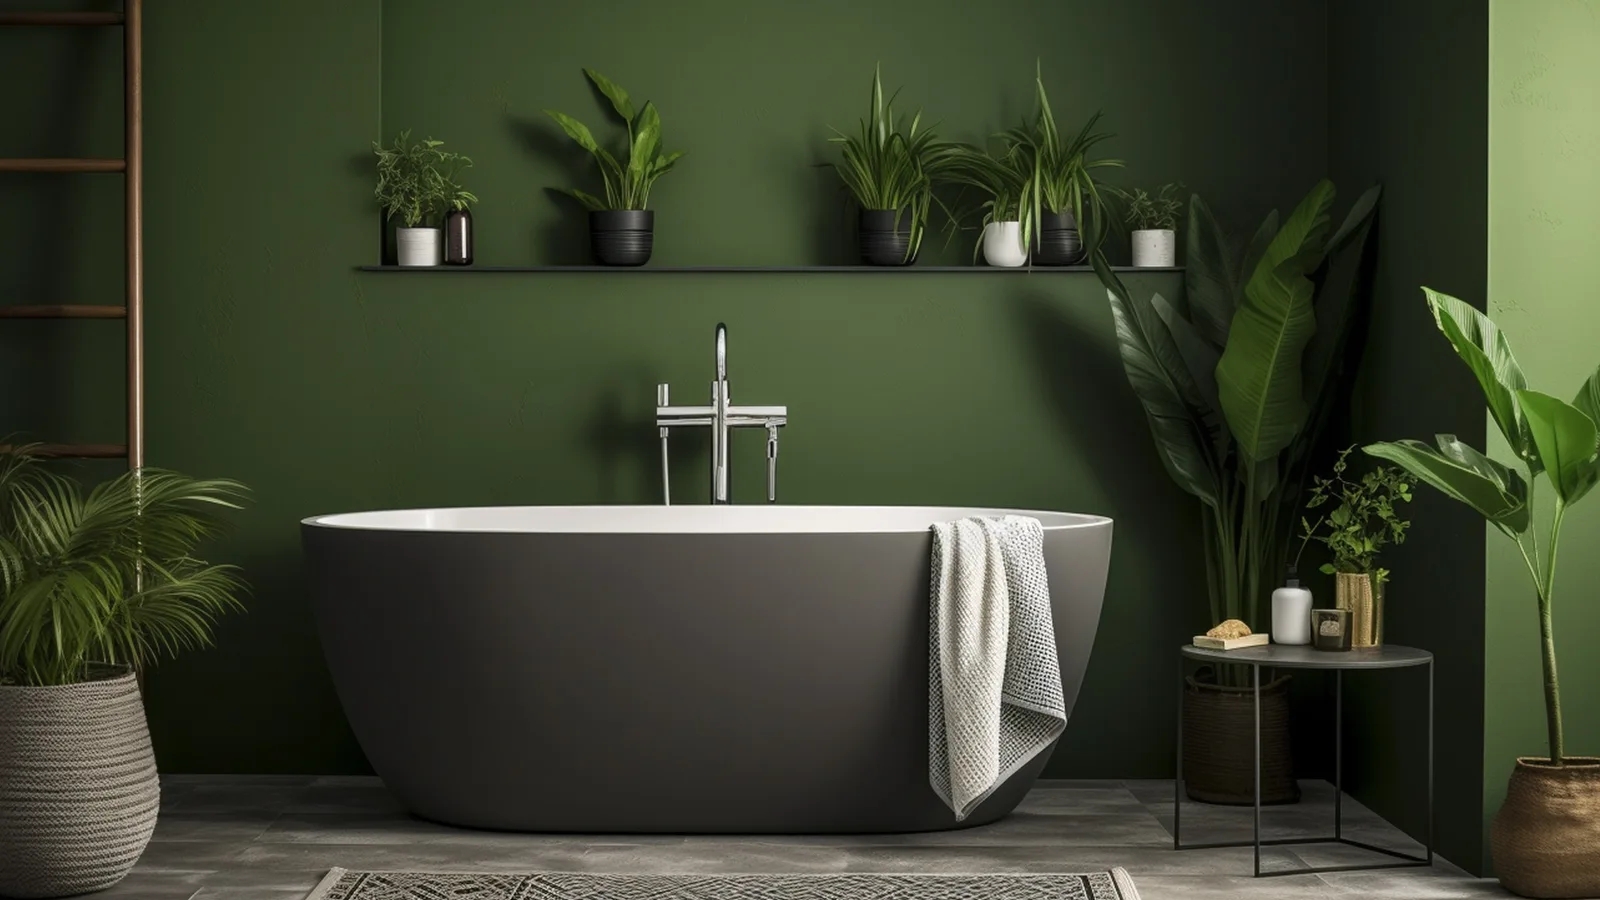 Olive green bathroom decor ideas: A bathroom with green walls and plants.